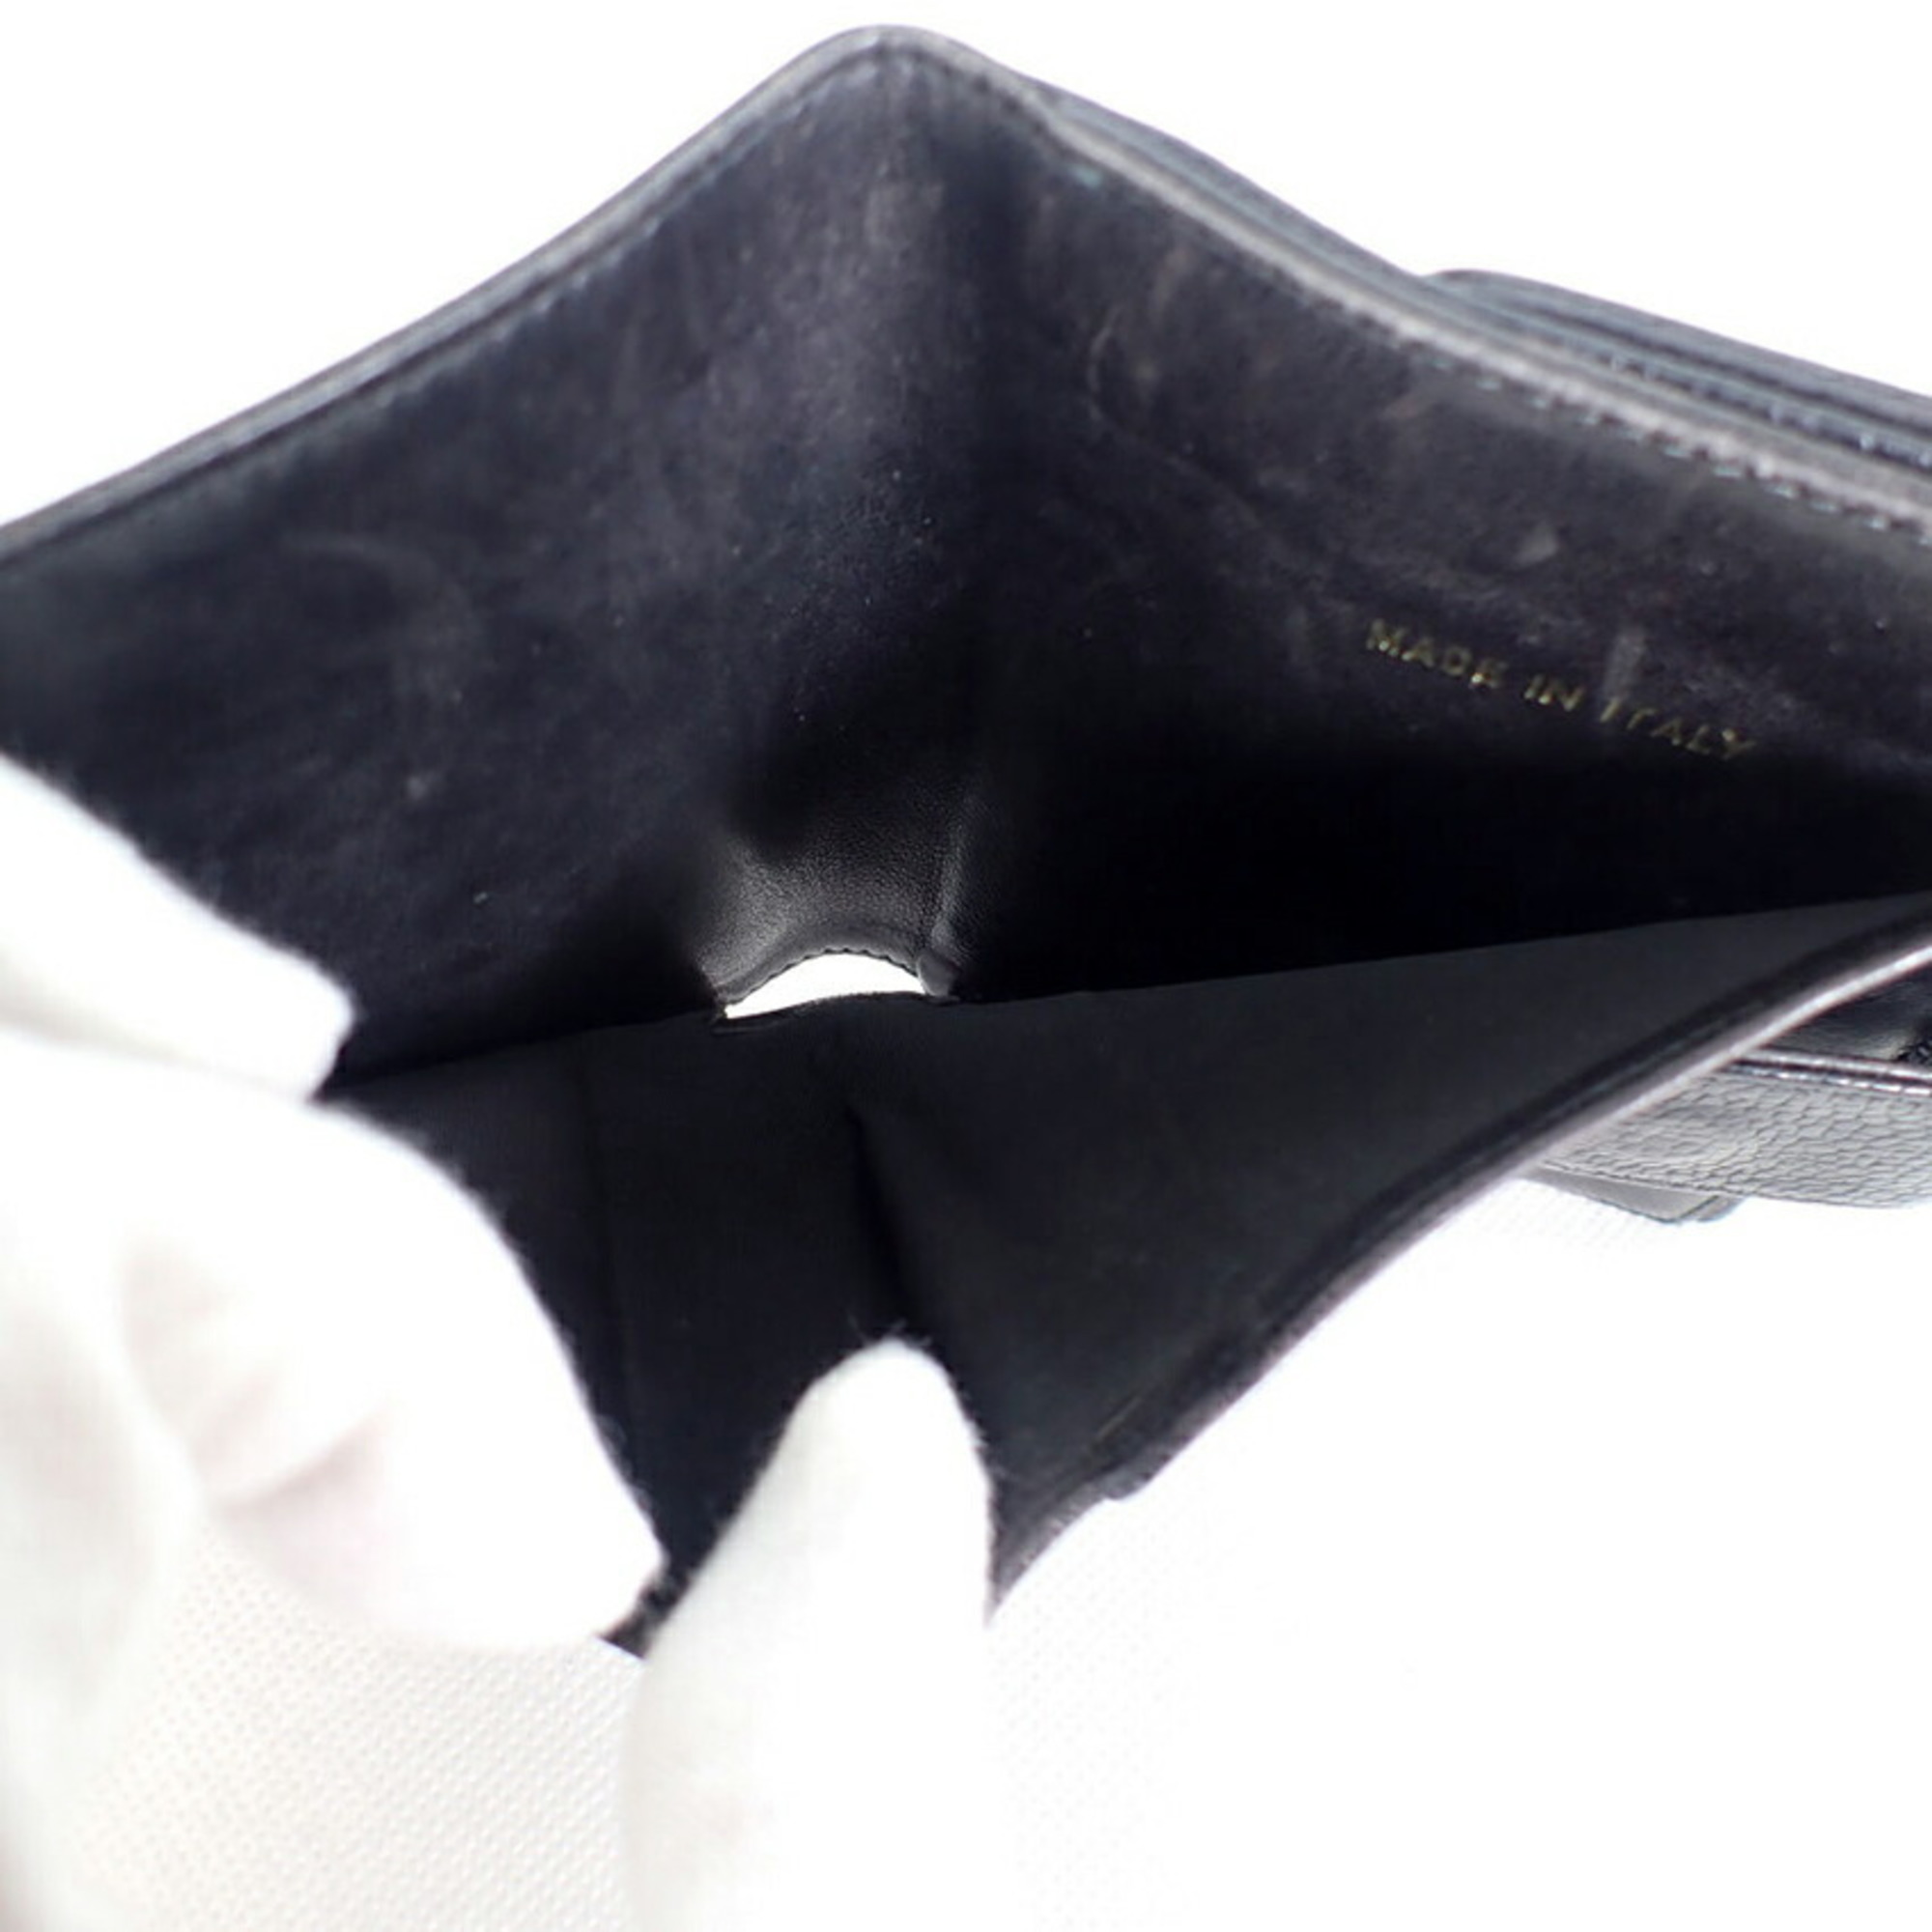 CHANEL Caviar Skin No. 4 Black Trifold Wallet